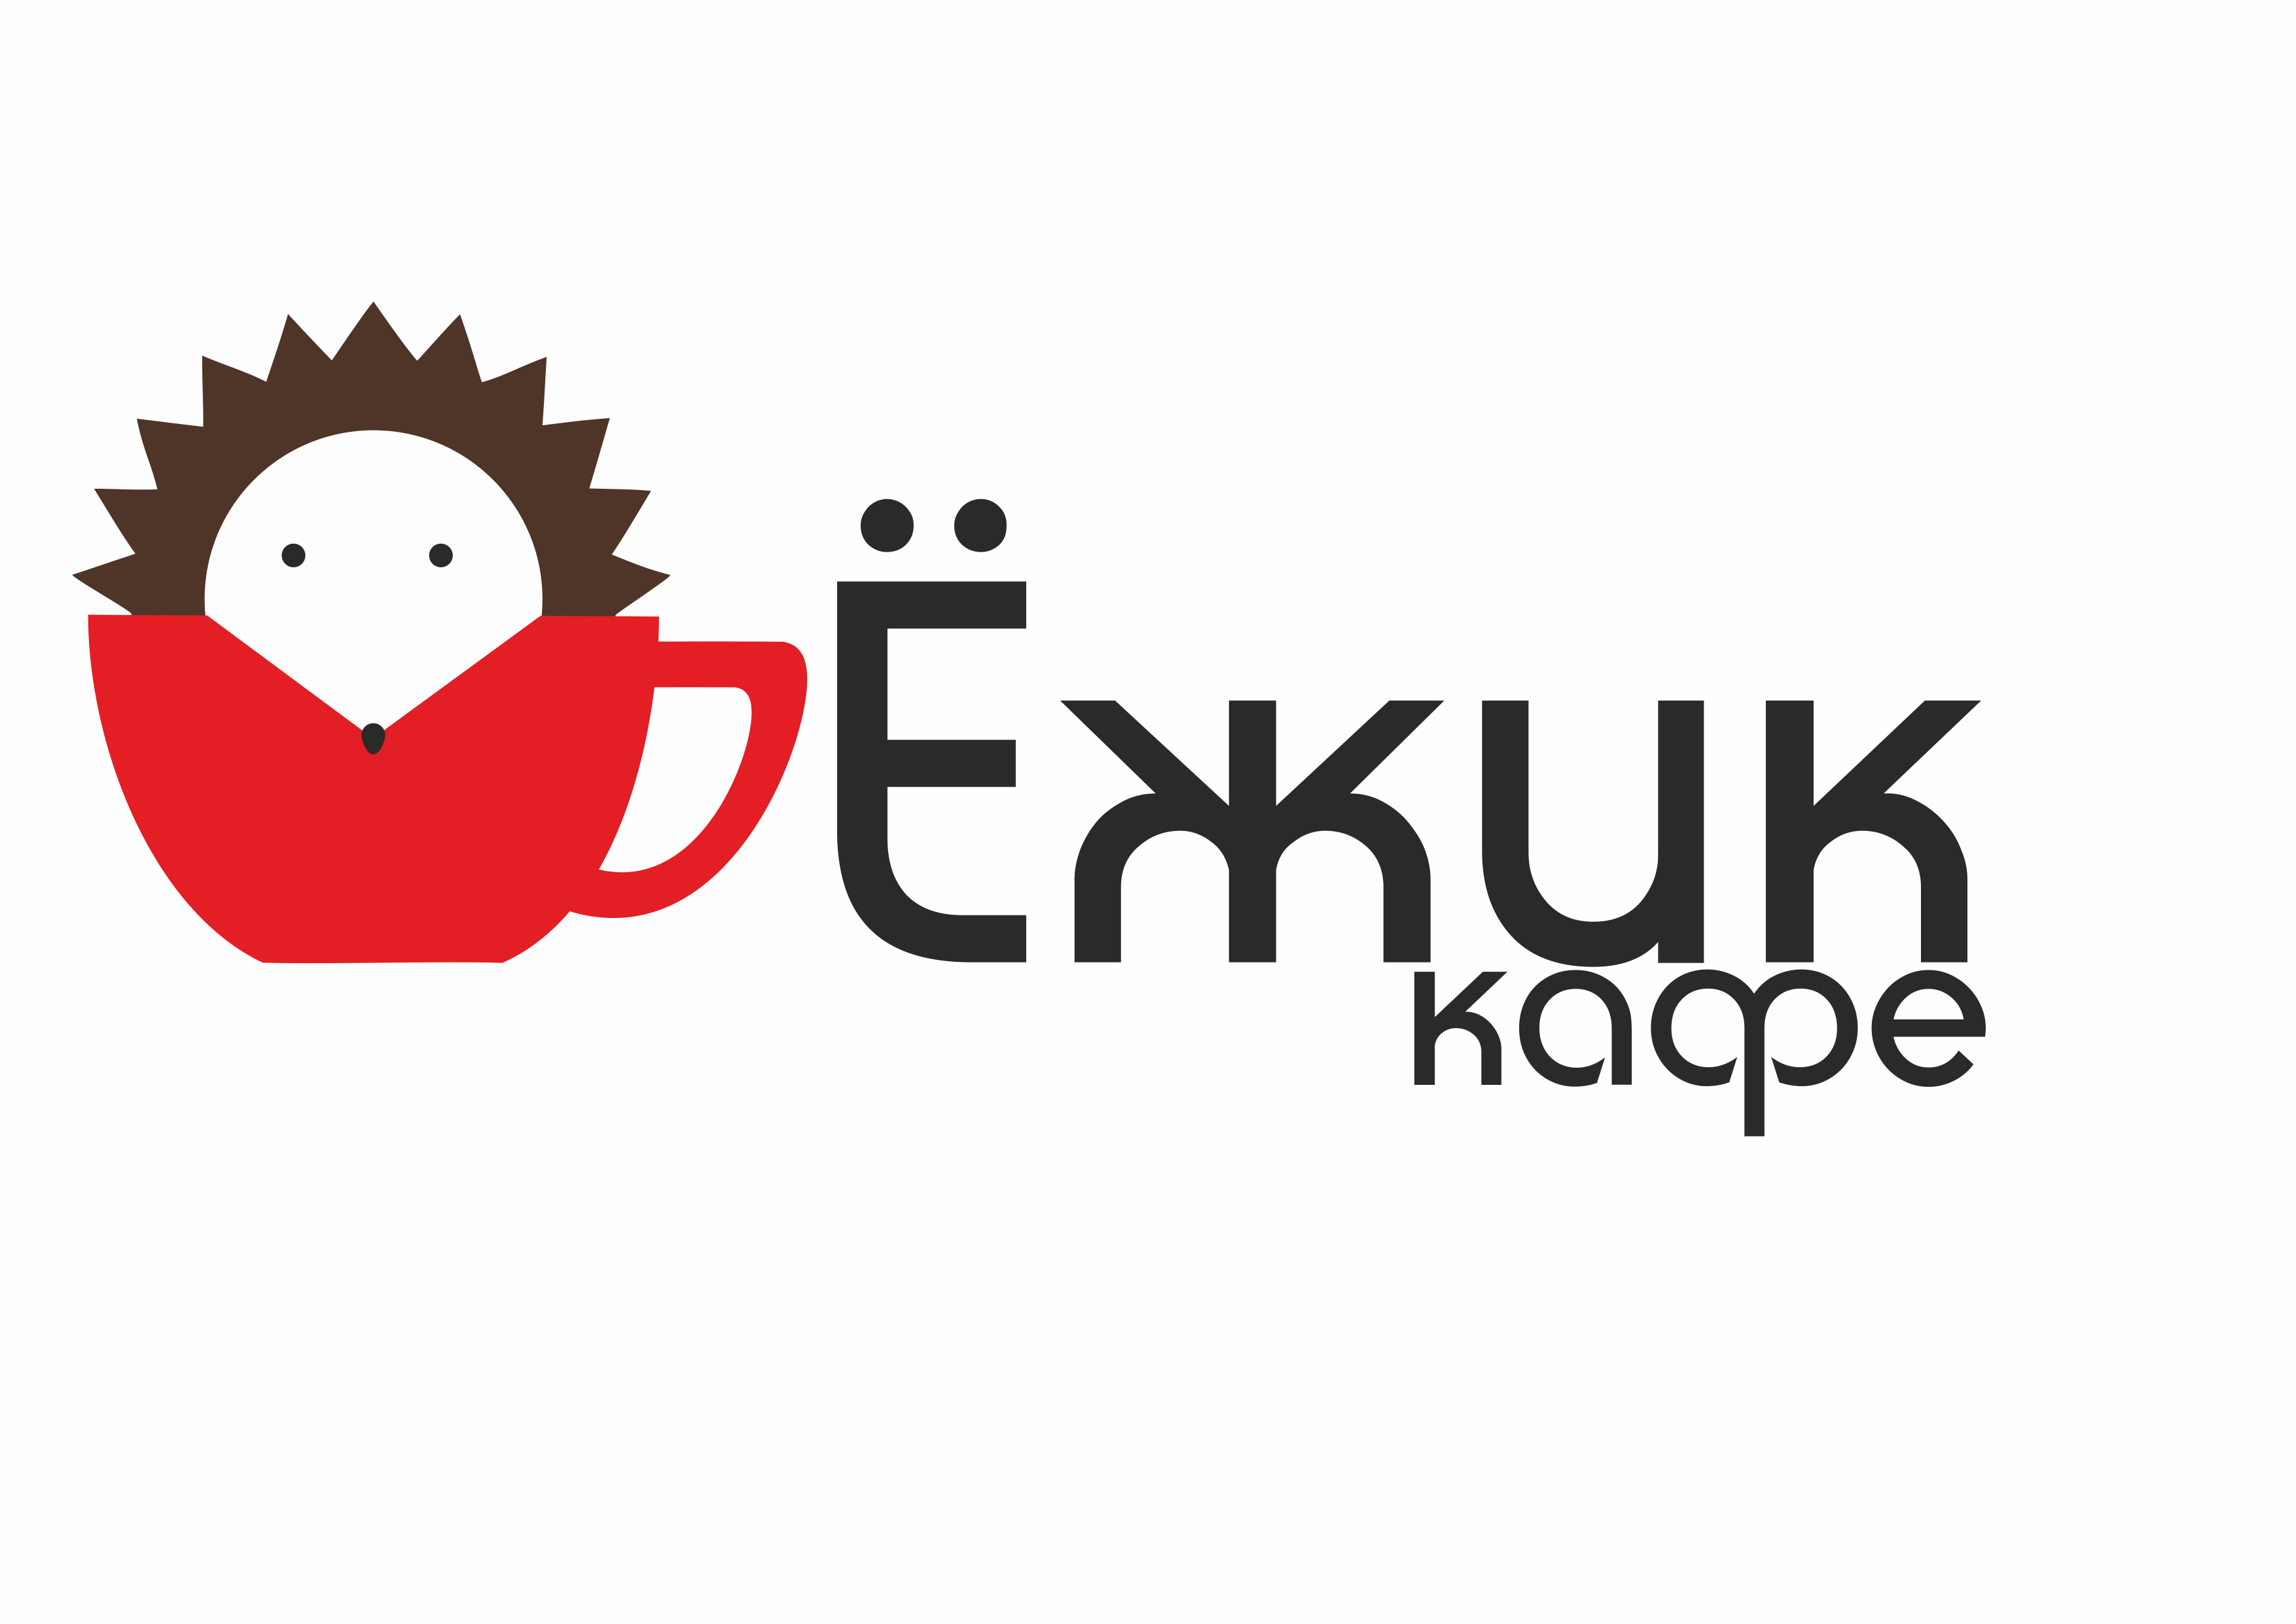 Кофейня ёж логотип. Эмблема Ежик. Ejik логотип. Ресторан еж логотип. Ежик ресторан